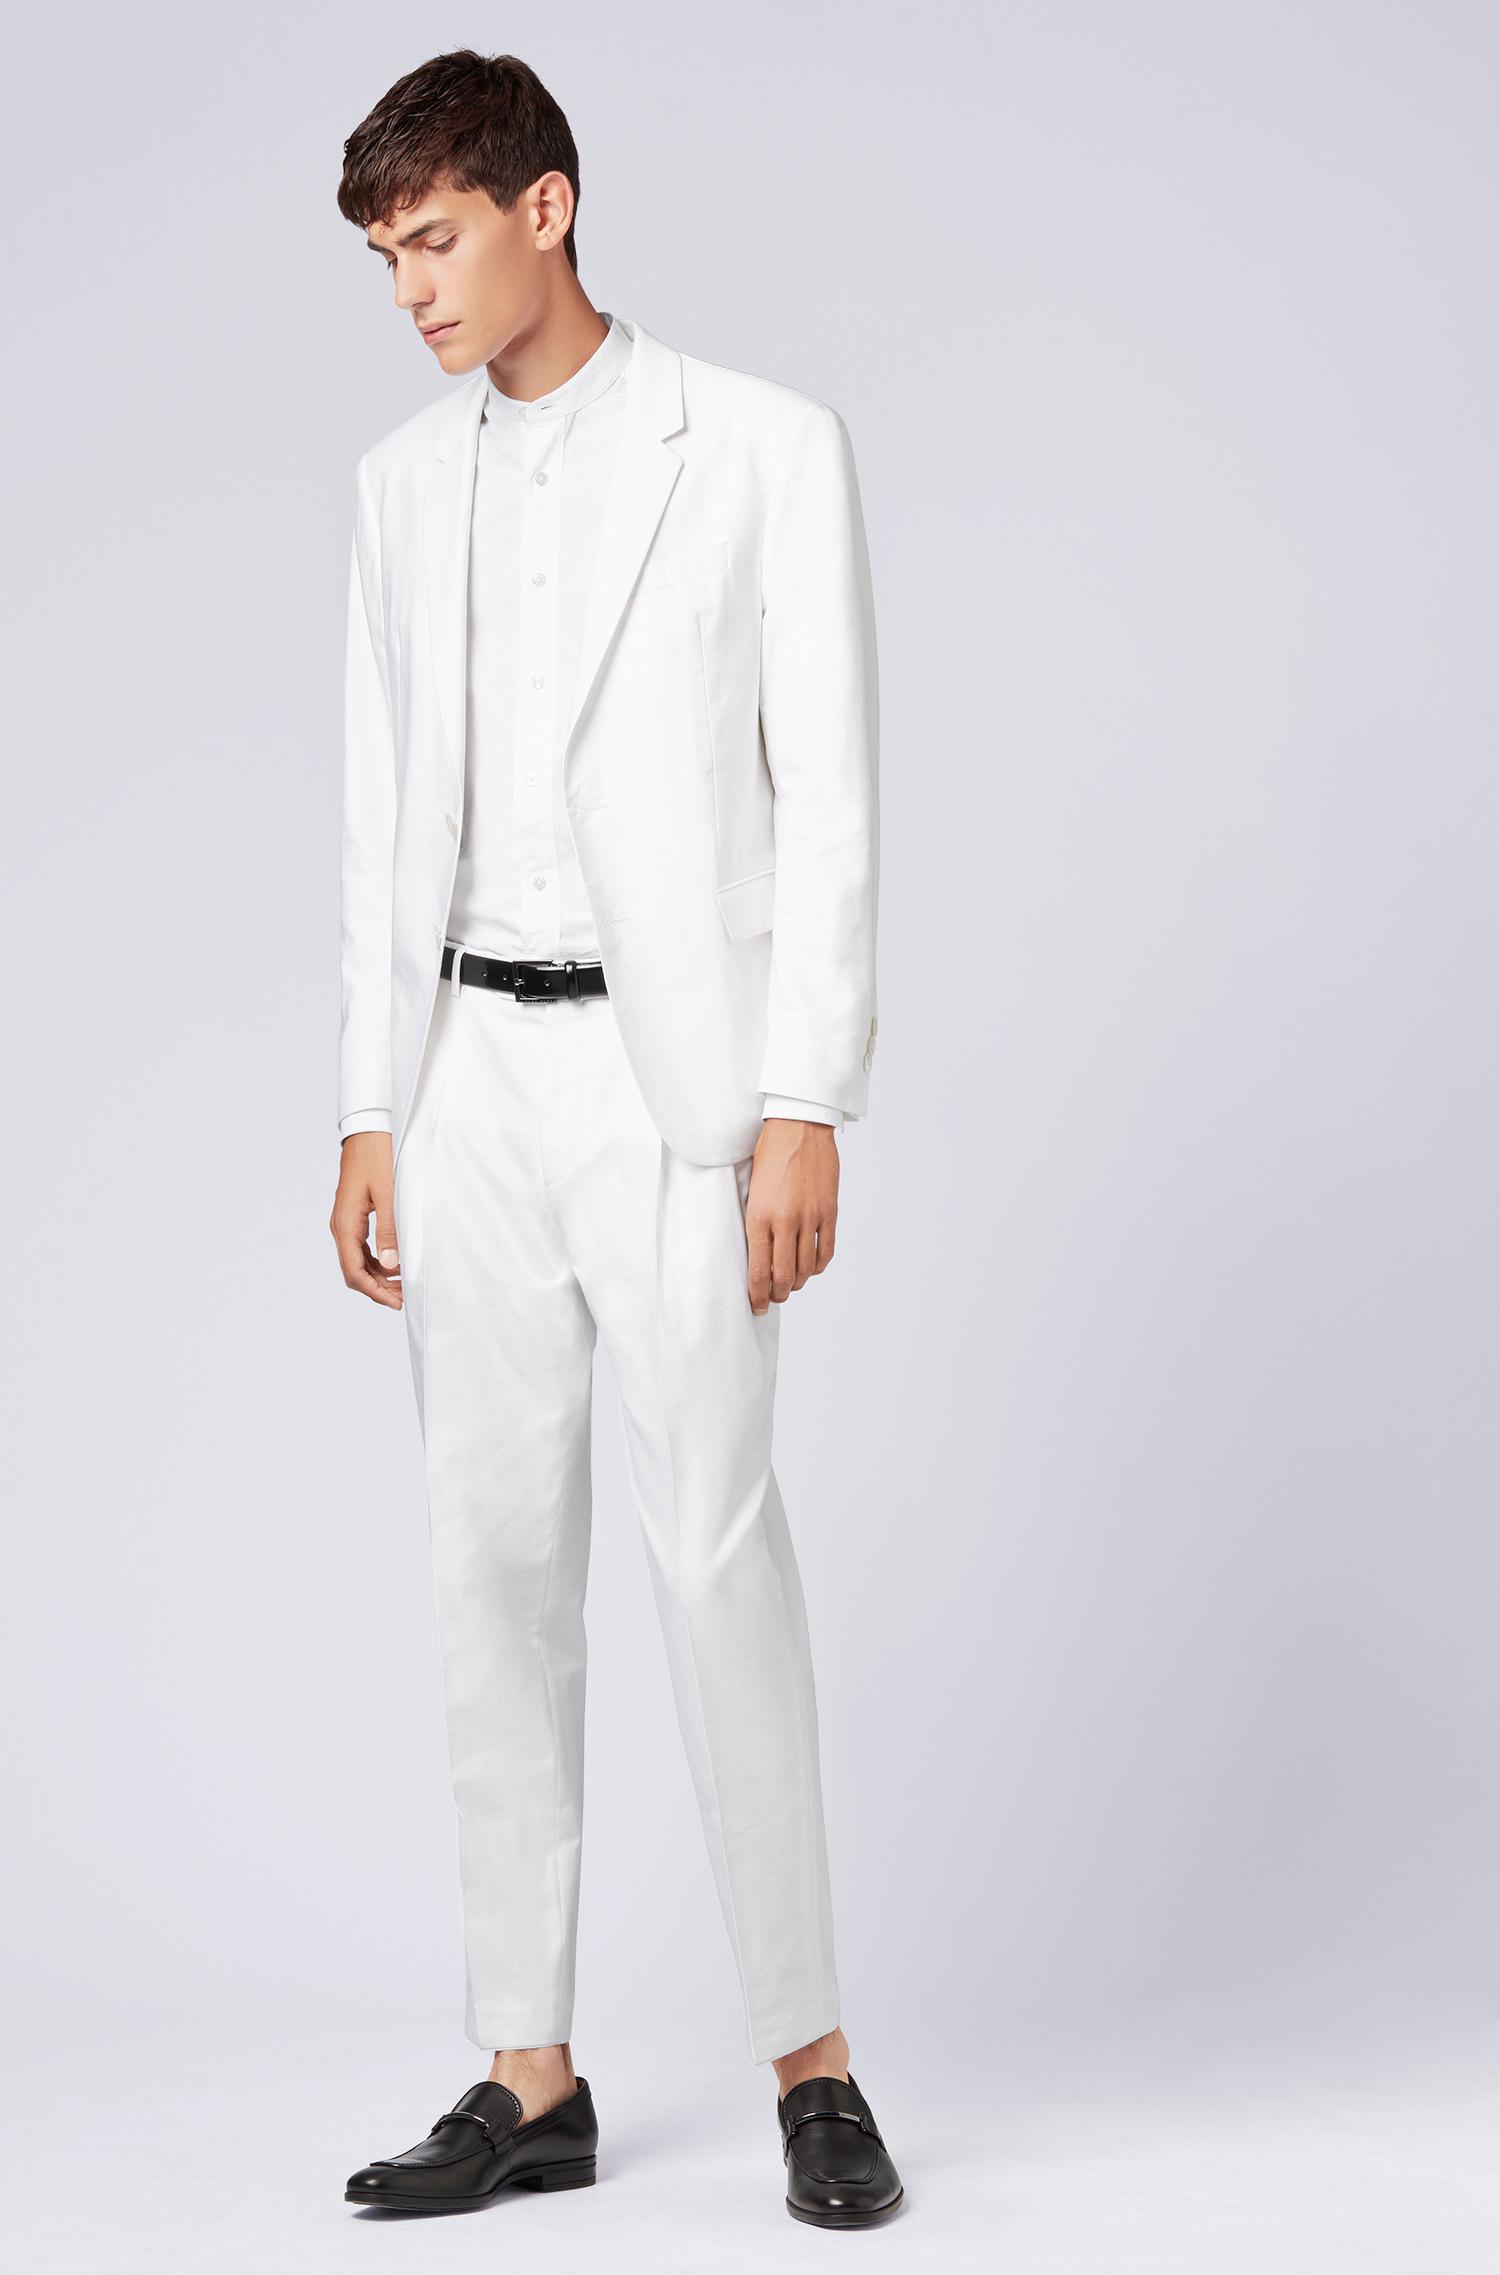 Purchase \u003e hugo boss white suit, Up to 